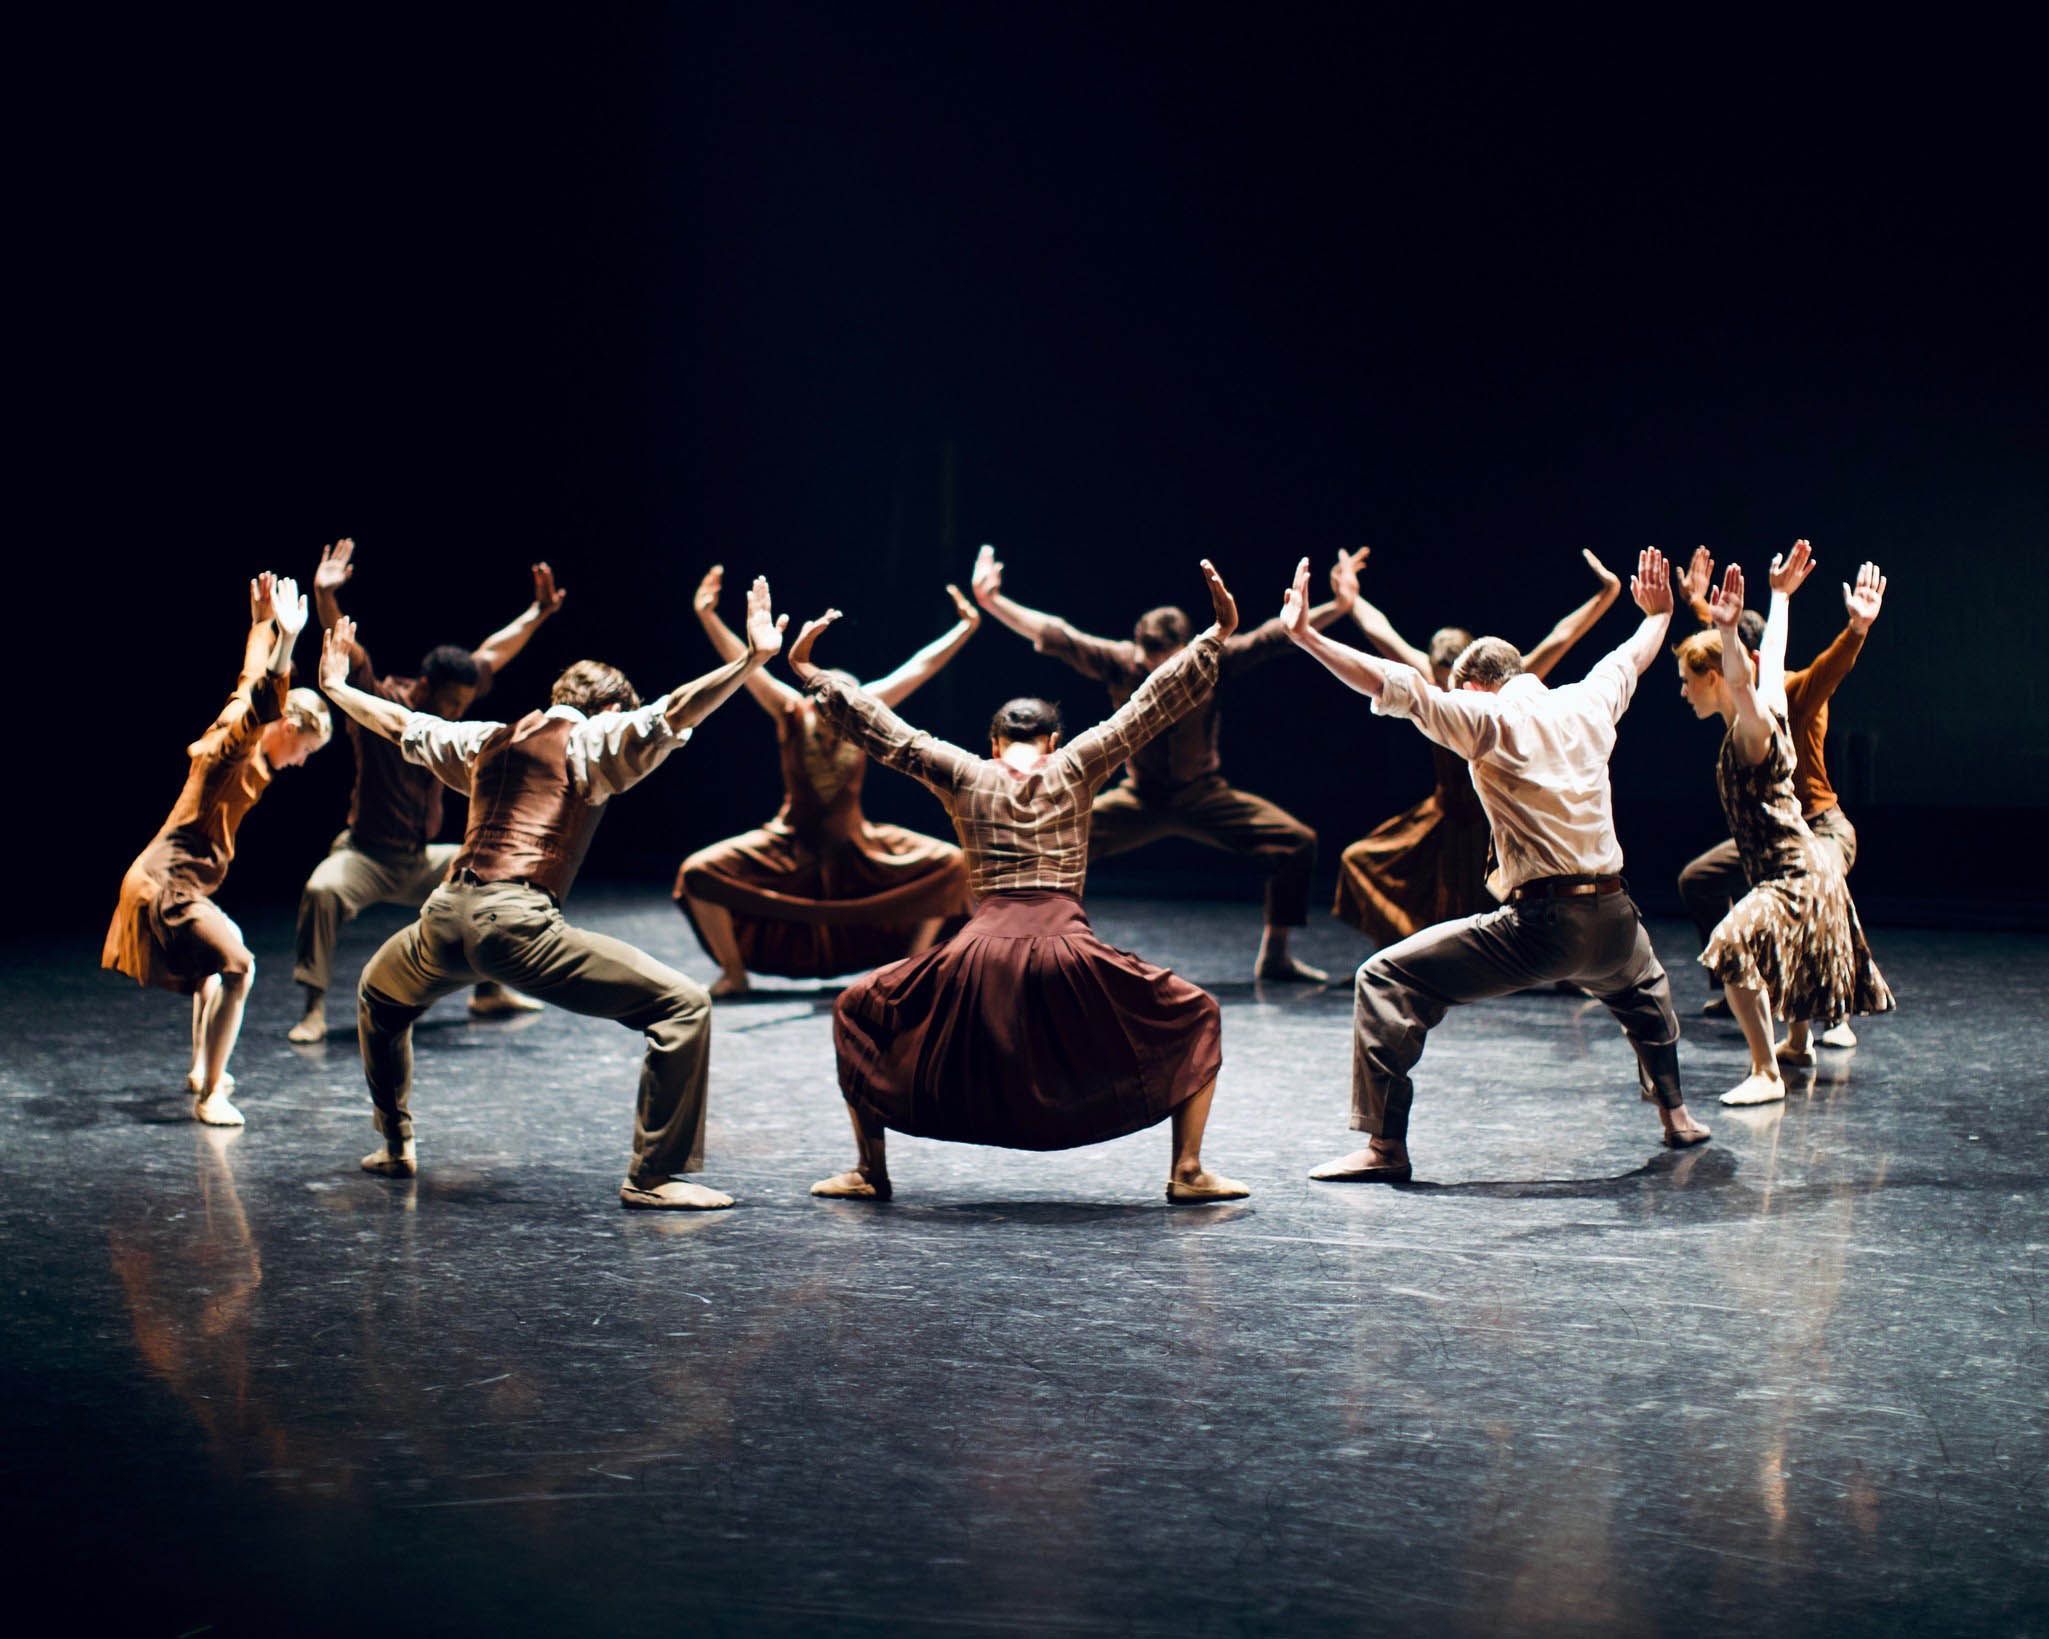 Grand Rapids Ballet's 2021-2022 Season celebrates the joy and art of dance